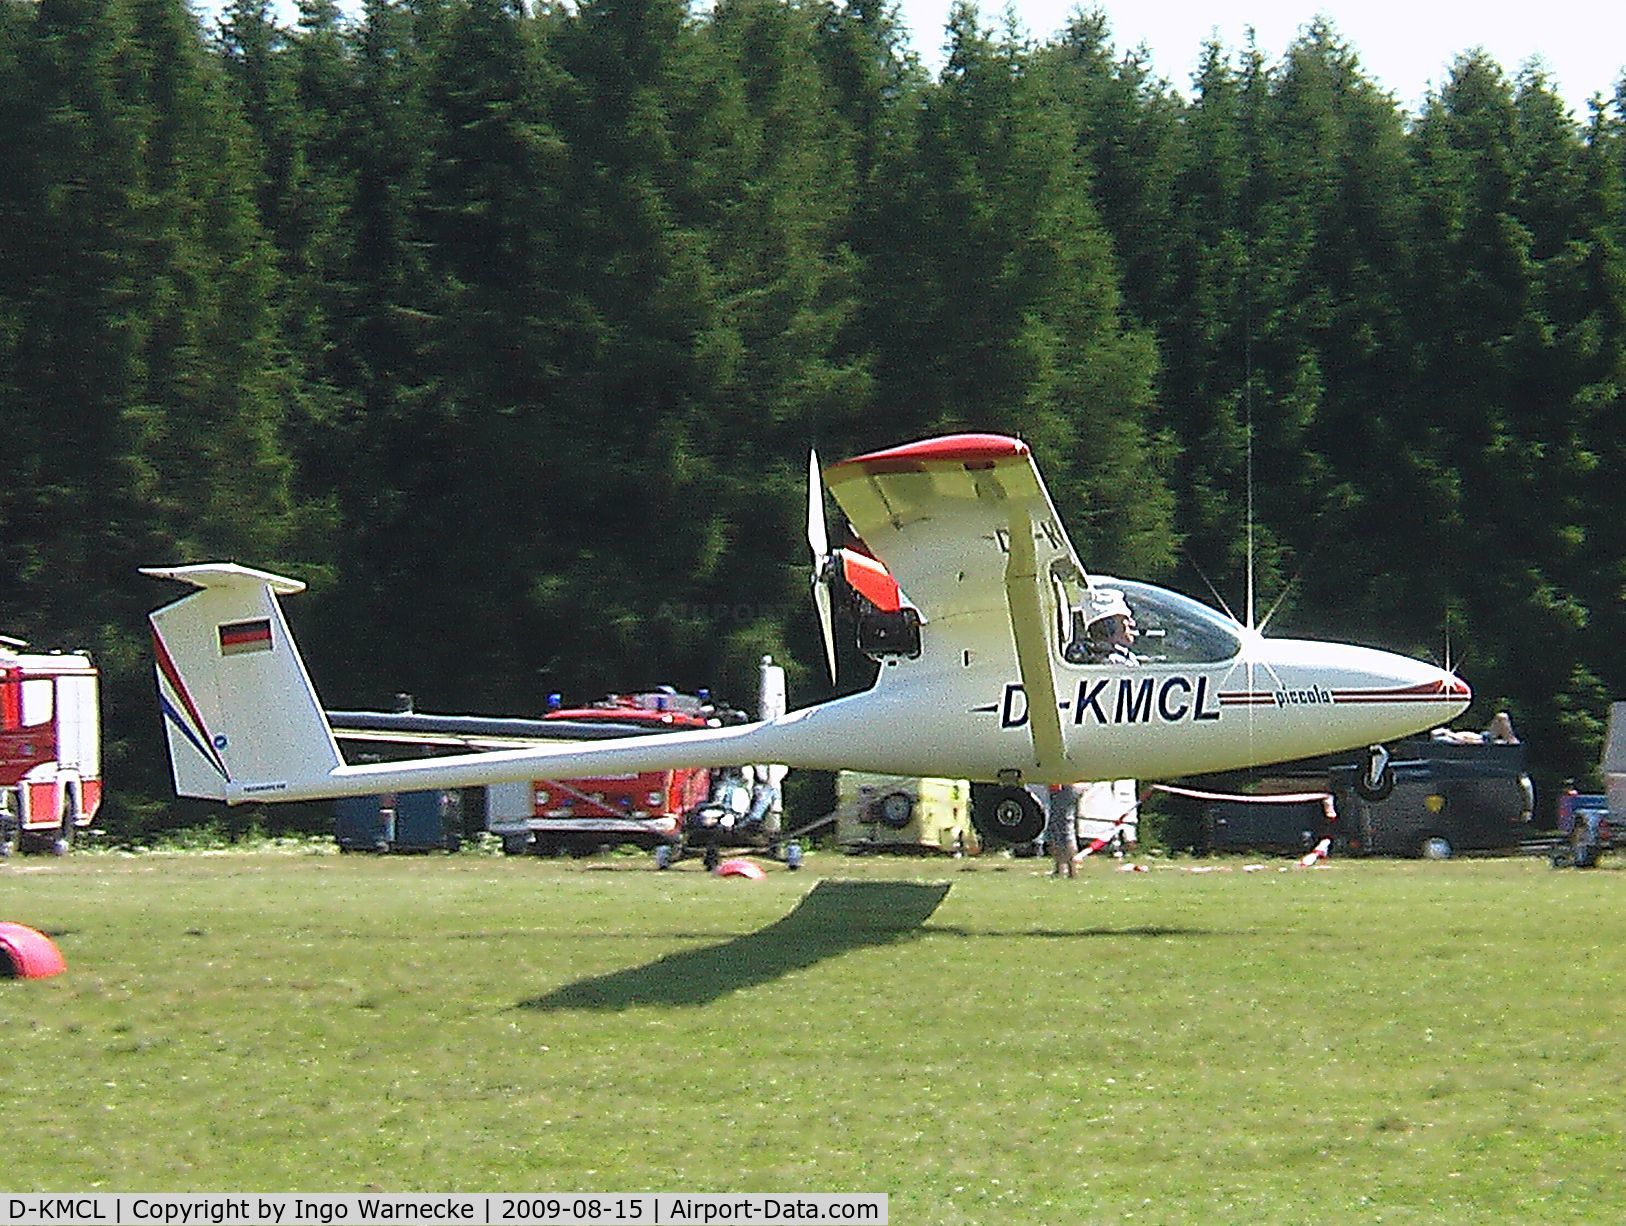 D-KMCL, Technoflug Piccolo B C/N 120, Technoflug Piccolo B at the Montabaur airshow 2009